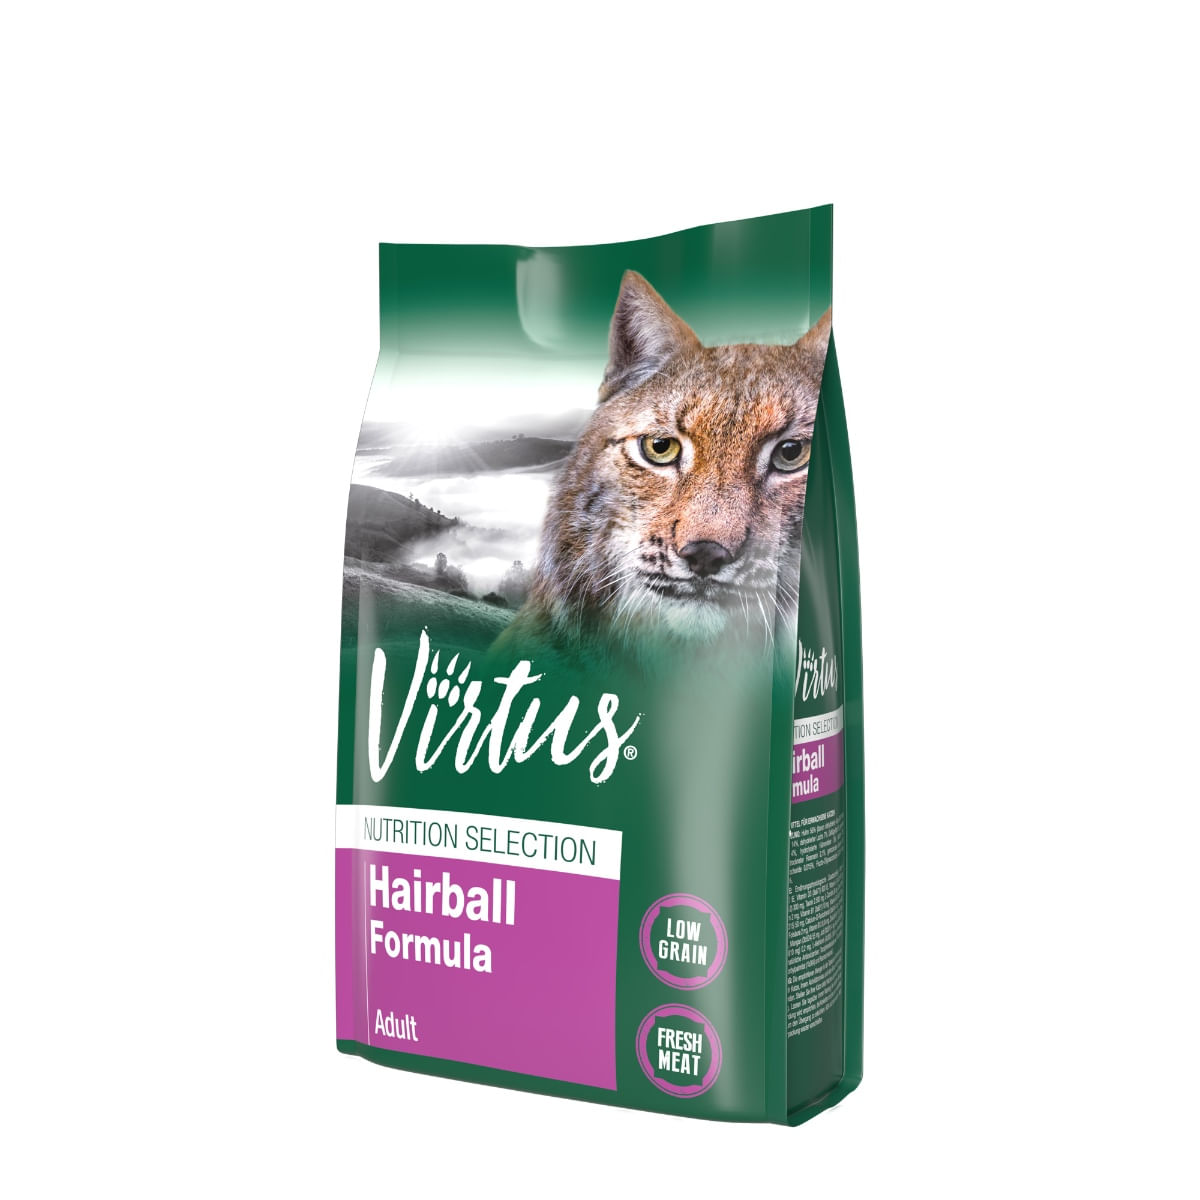 Virtus Cat Nutrition Selection Hairball Formula